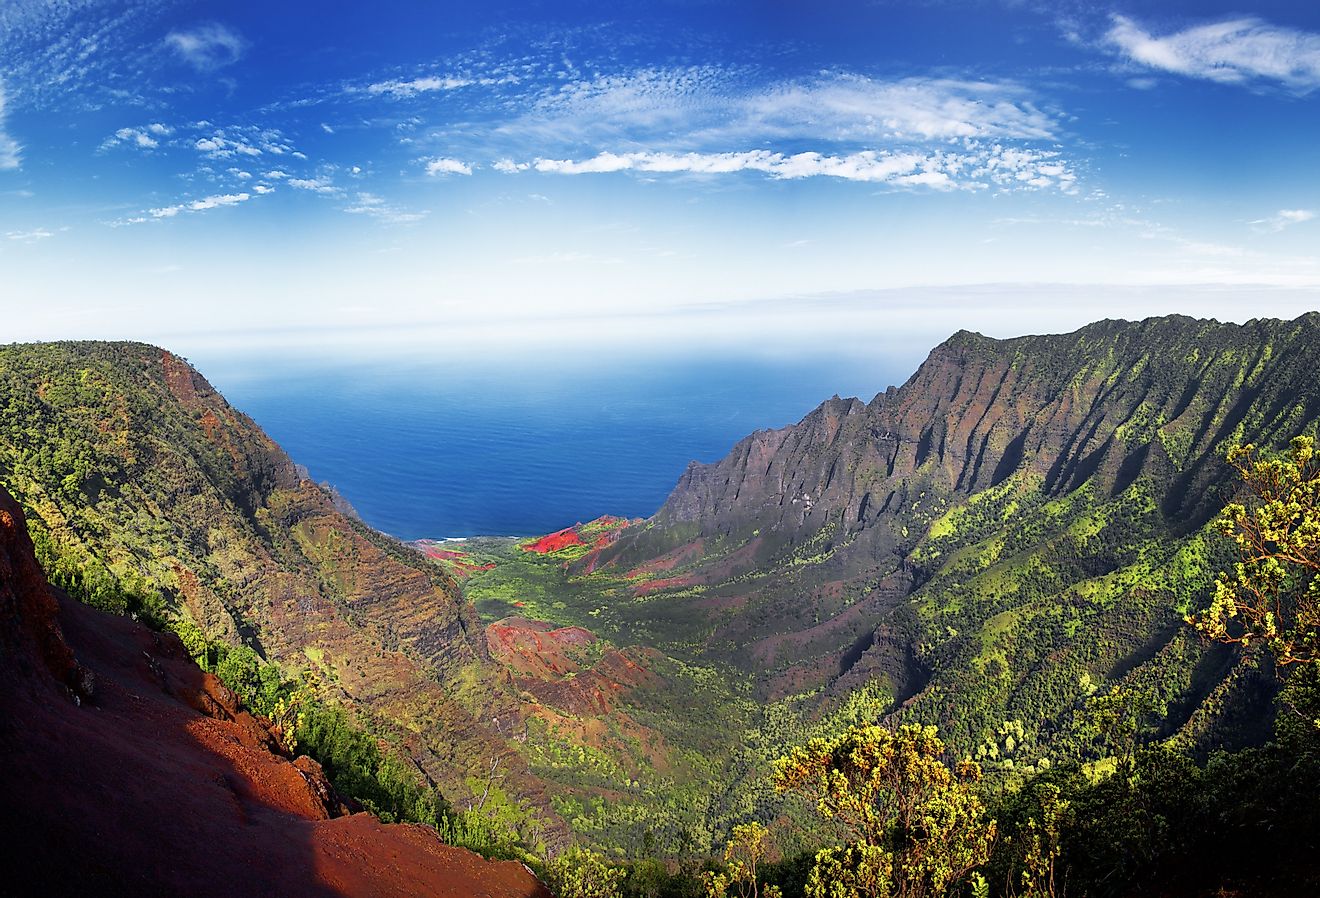 Panoramic view of lush green foliage in Weimea Canyon and NaPali coast Kauai, Hawaii. Image credit Bruce Beck via Shutterstock.